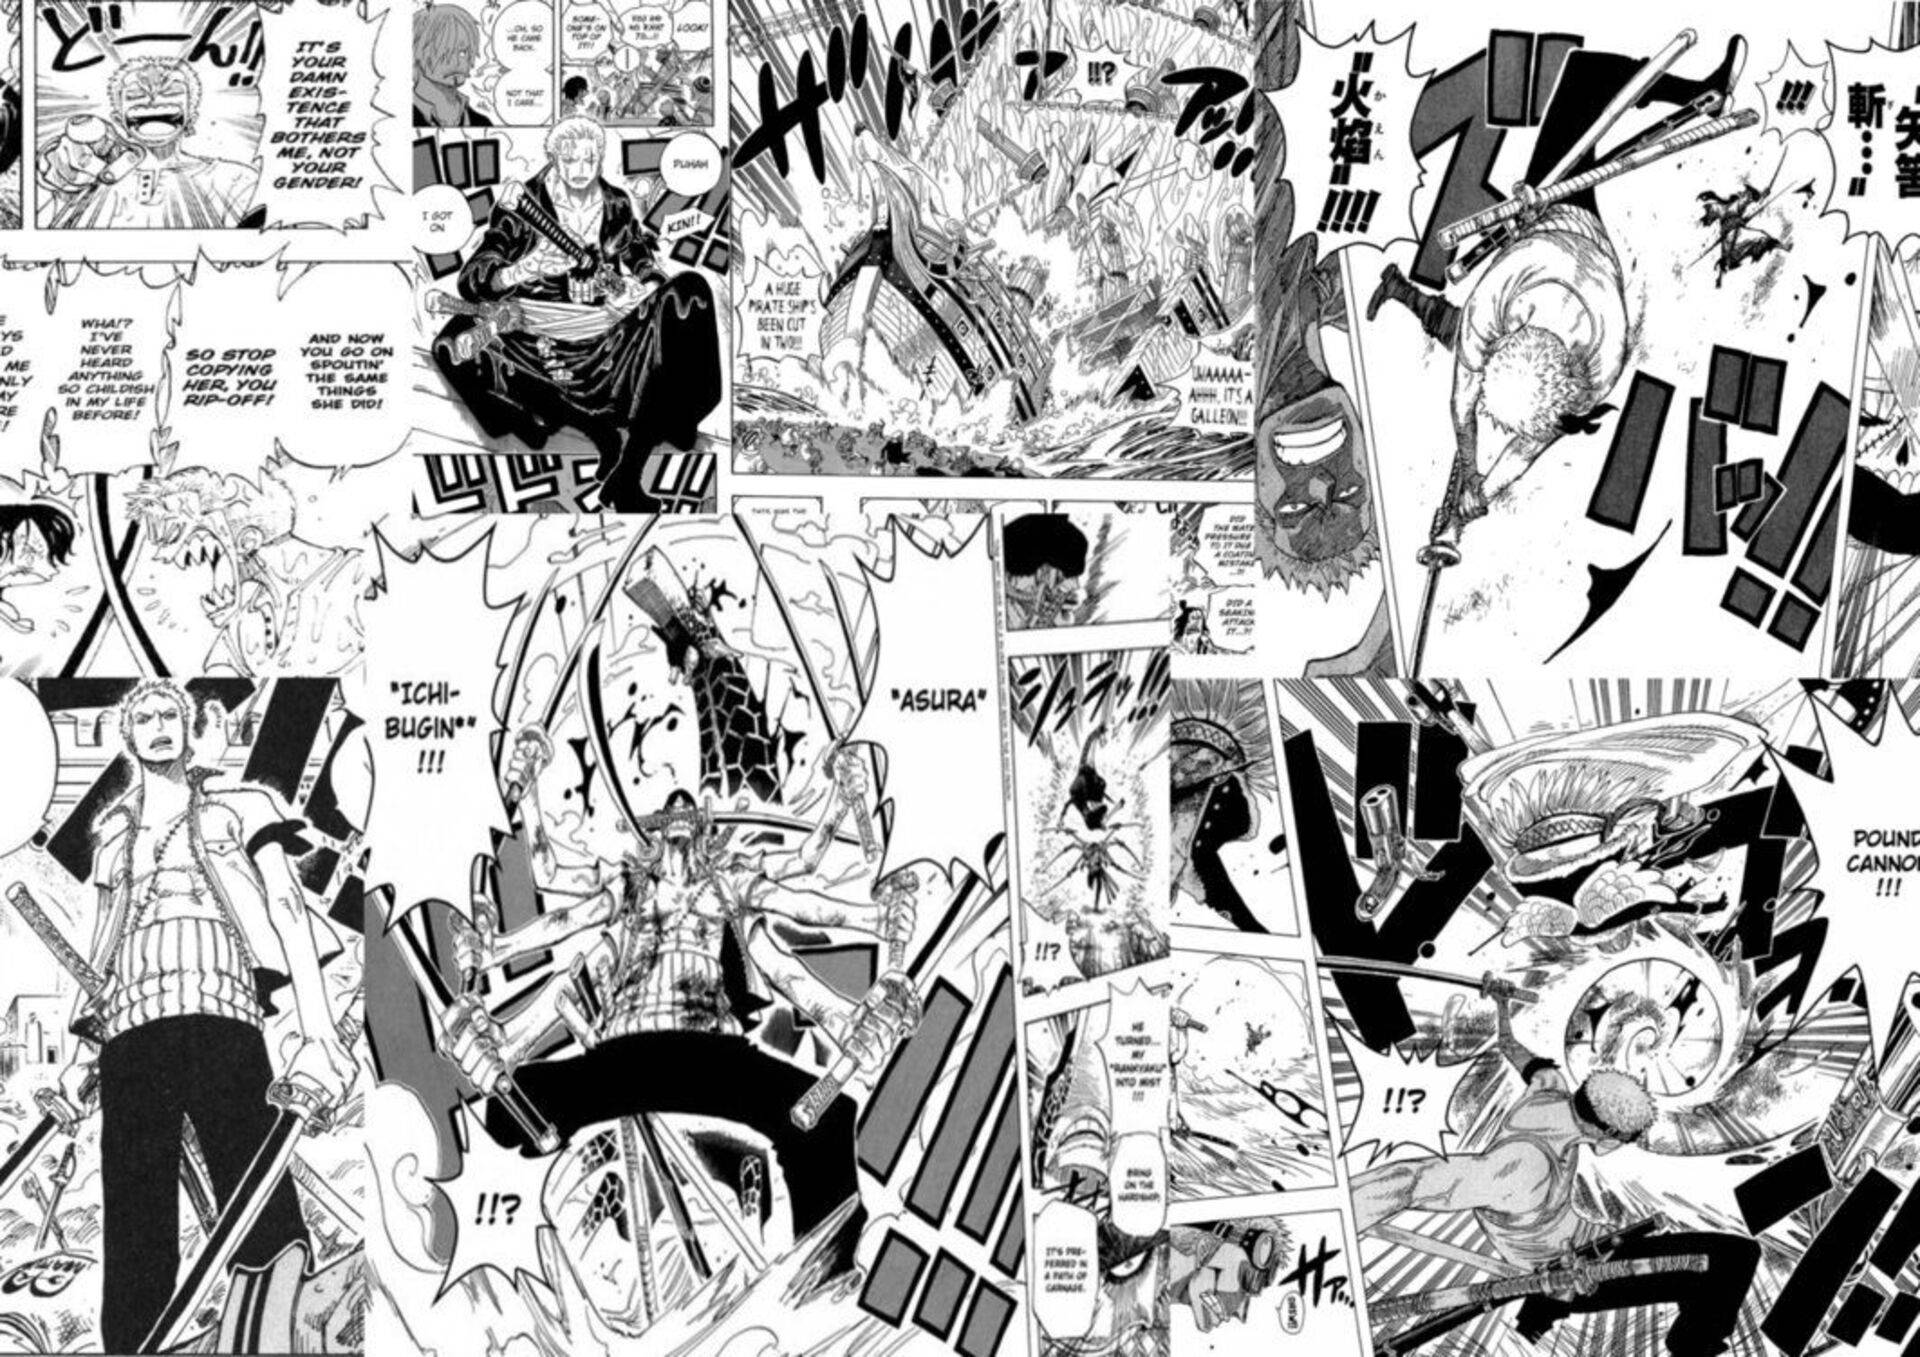 Manga 1920X1357 Wallpaper and Background Image